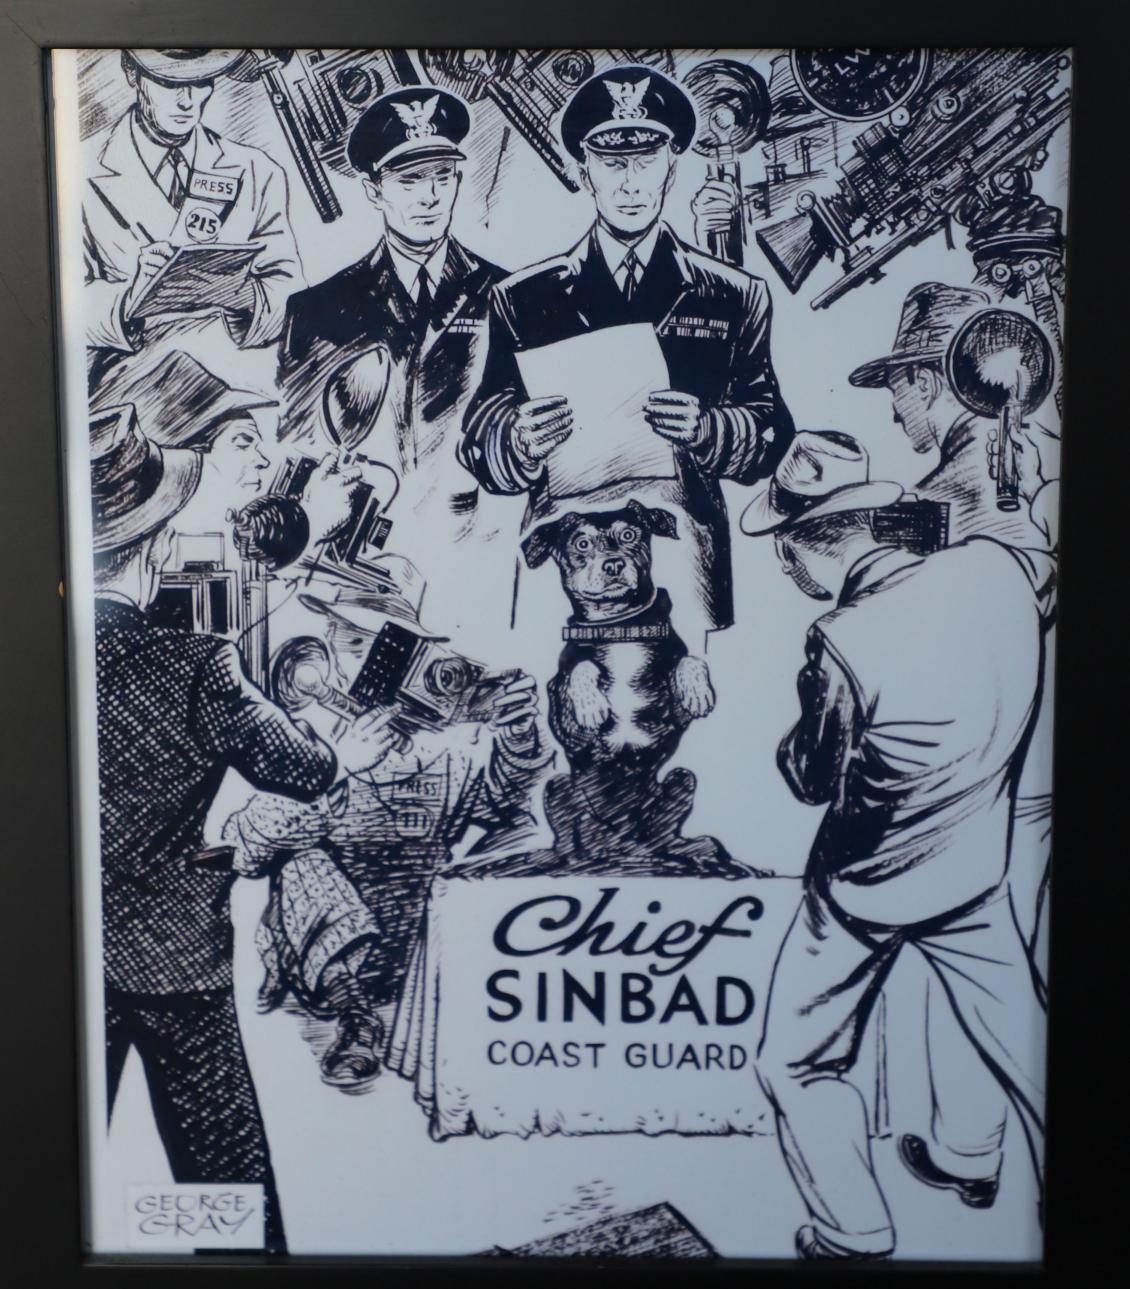 Chief Sinbad Poster - Coast GuardHeritage Museum Barnstable Mass